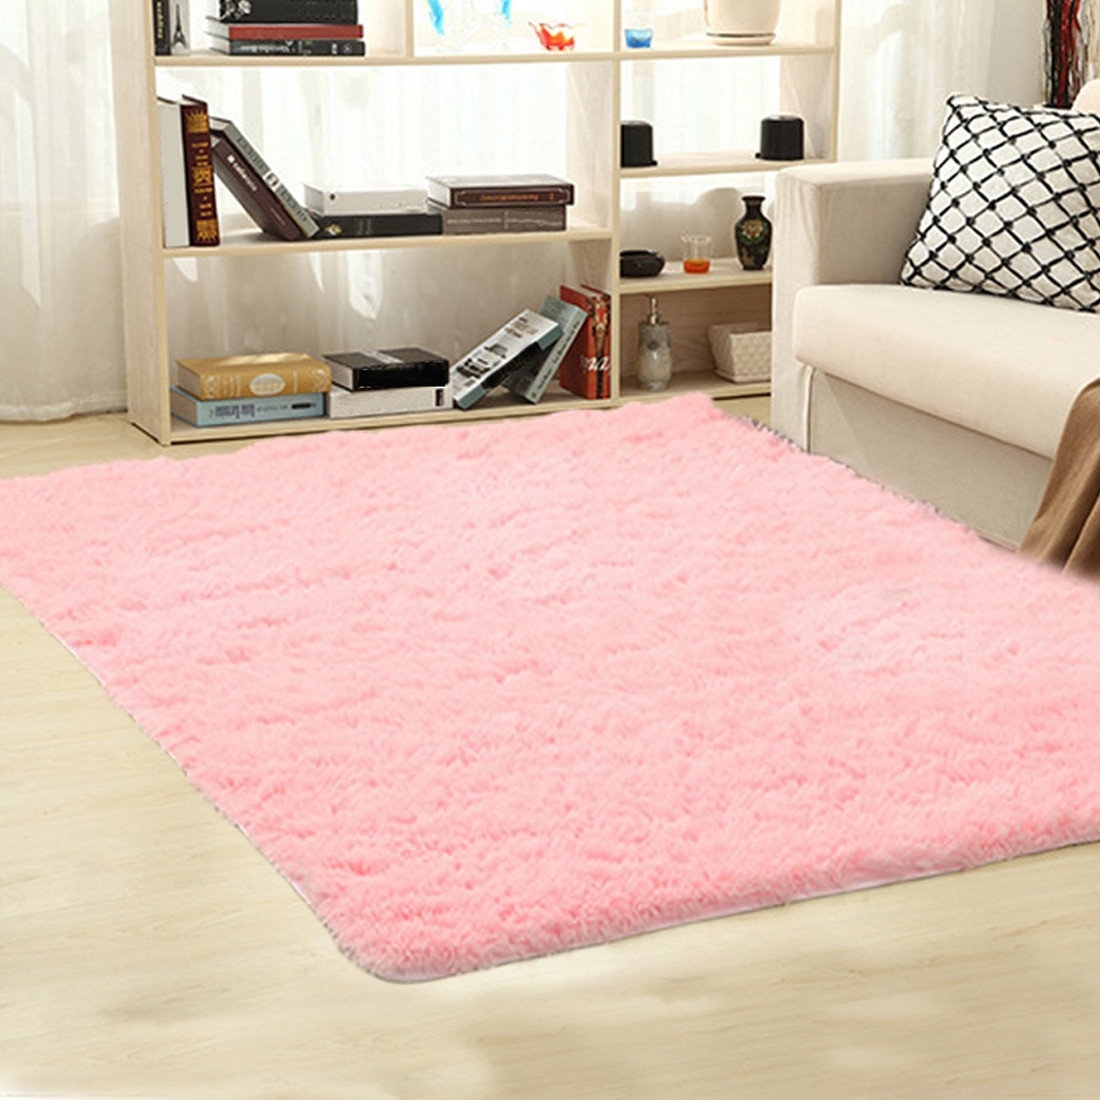 Soft Rug For Living Room
 Soft Shaggy Carpet For Living Room European Home Warm